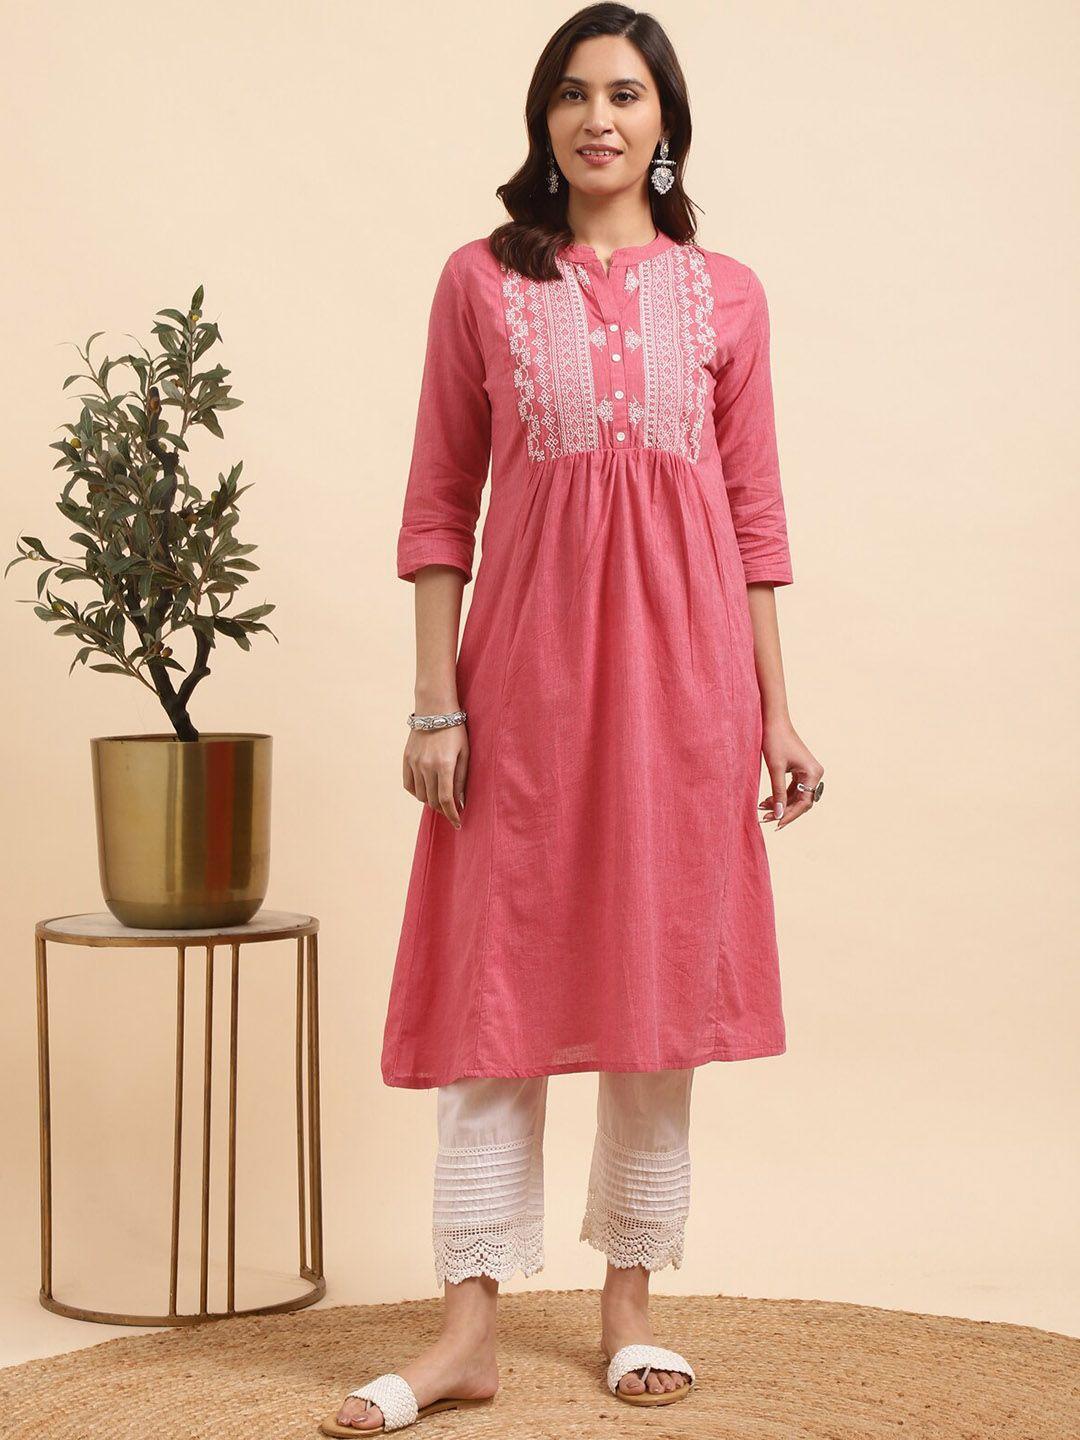 rangita women ethnic motifs embroidered regular pure cotton kurta with trousers